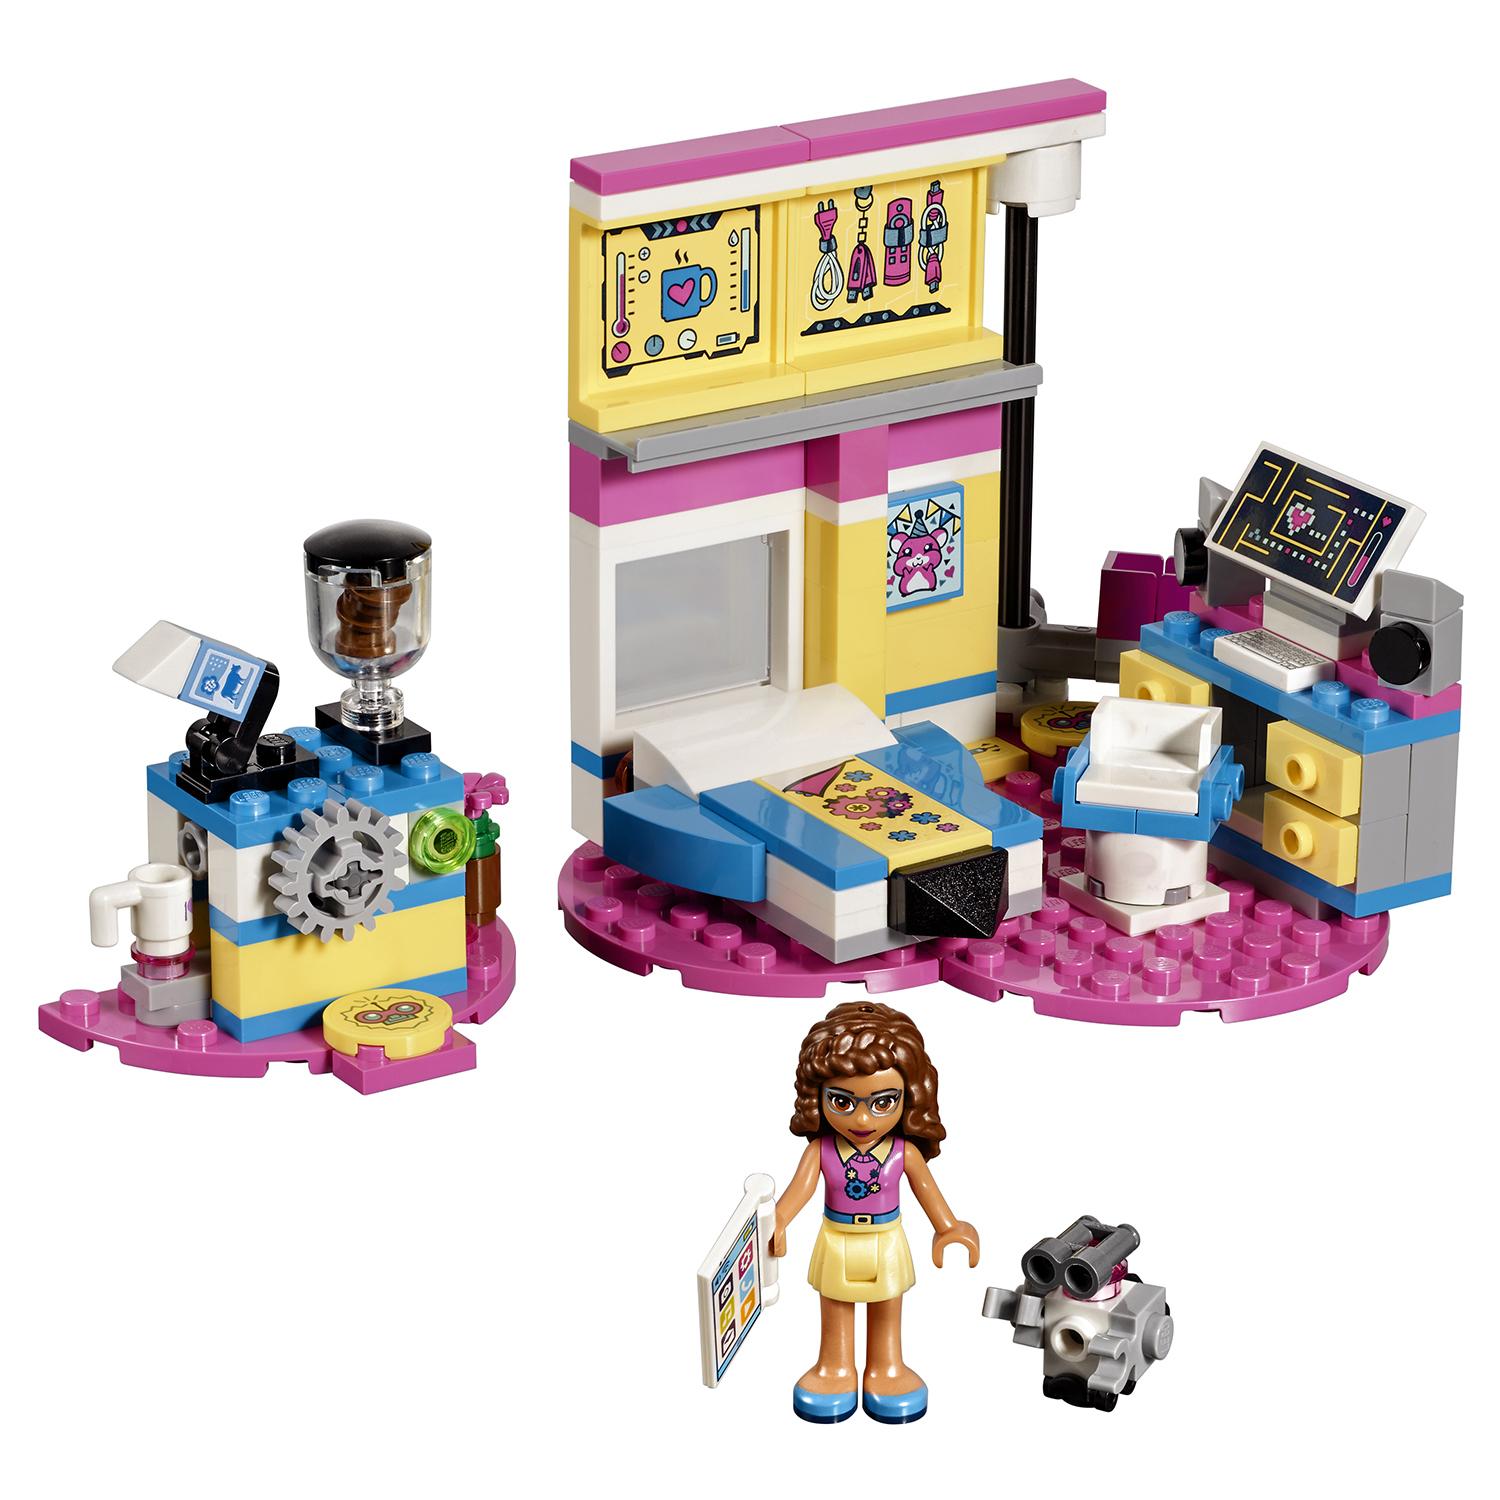 Lego Friends 41329 Комната Оливии